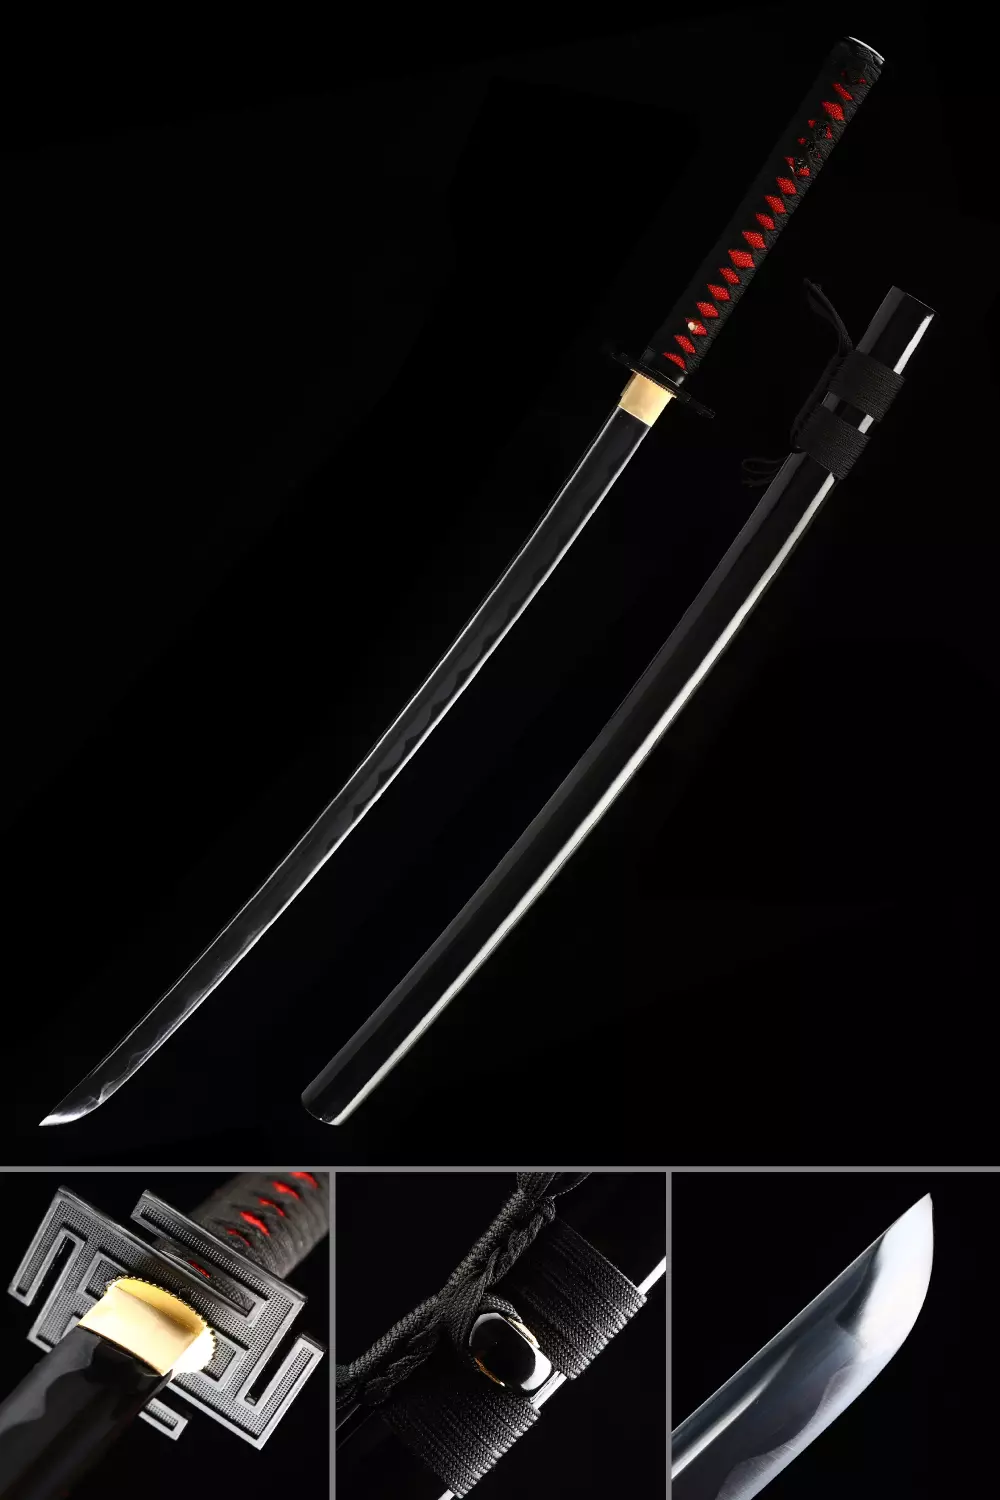 Sengoku Basara Sworddouble Tsuba Anime Katana HK9595  China Japanese Swords  and Swords price  MadeinChinacom